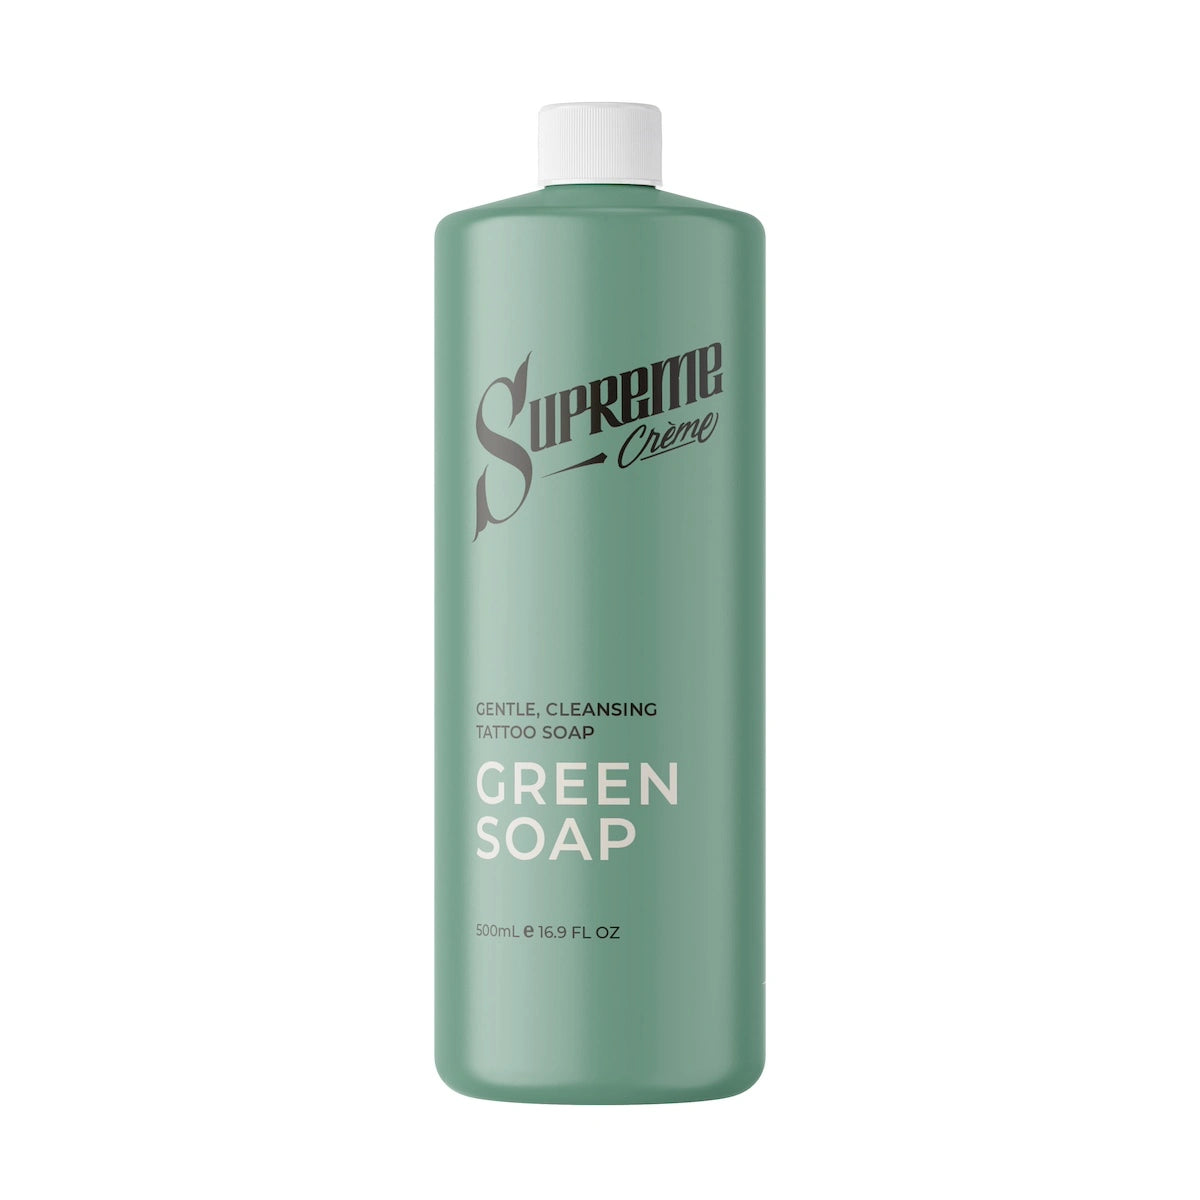 GREEN SOAP 5OOML - SUPREME CREME